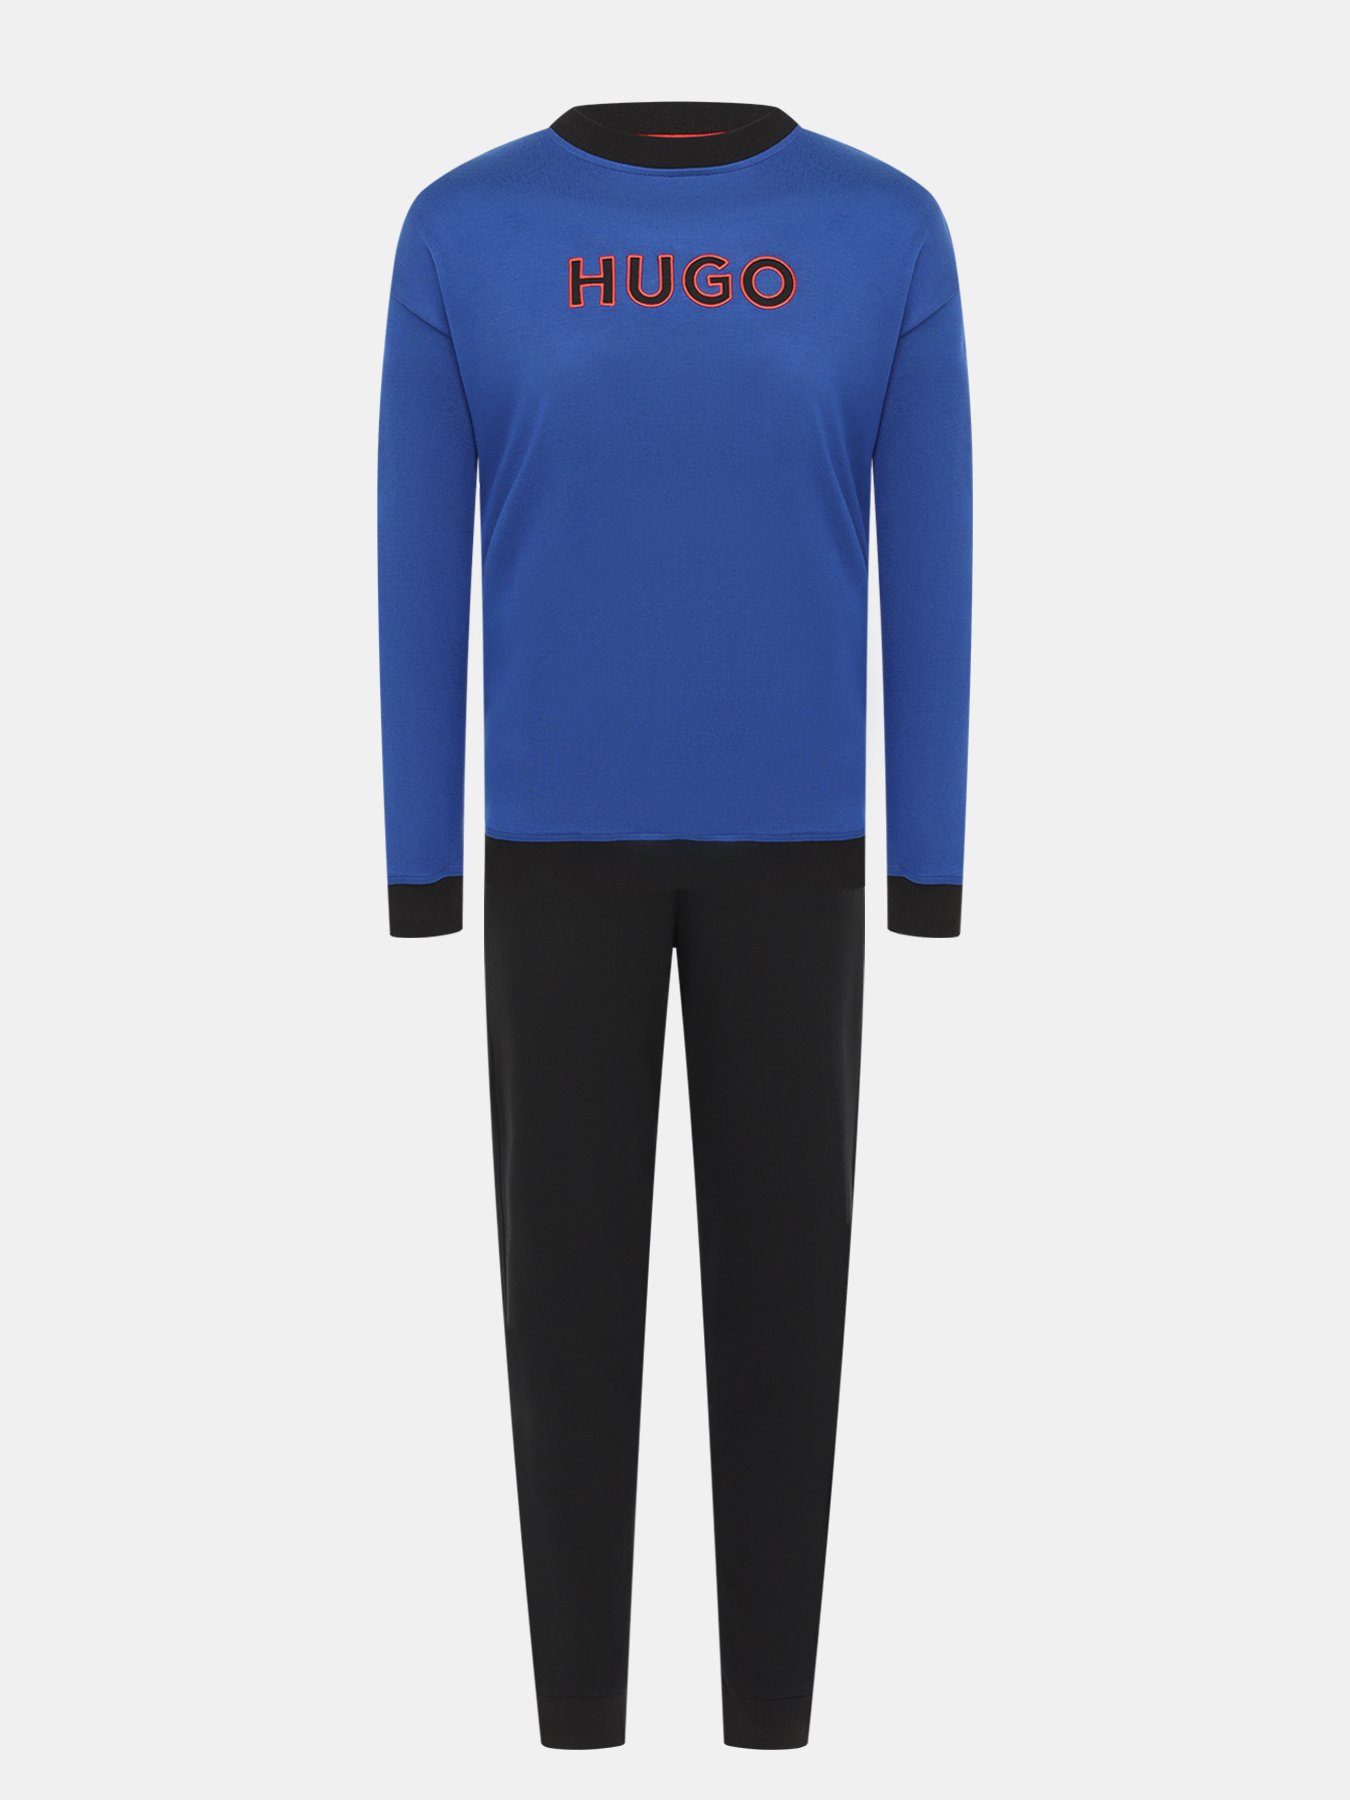 Пижама Jaglion HUGO 438641-043, цвет синий, размер 48